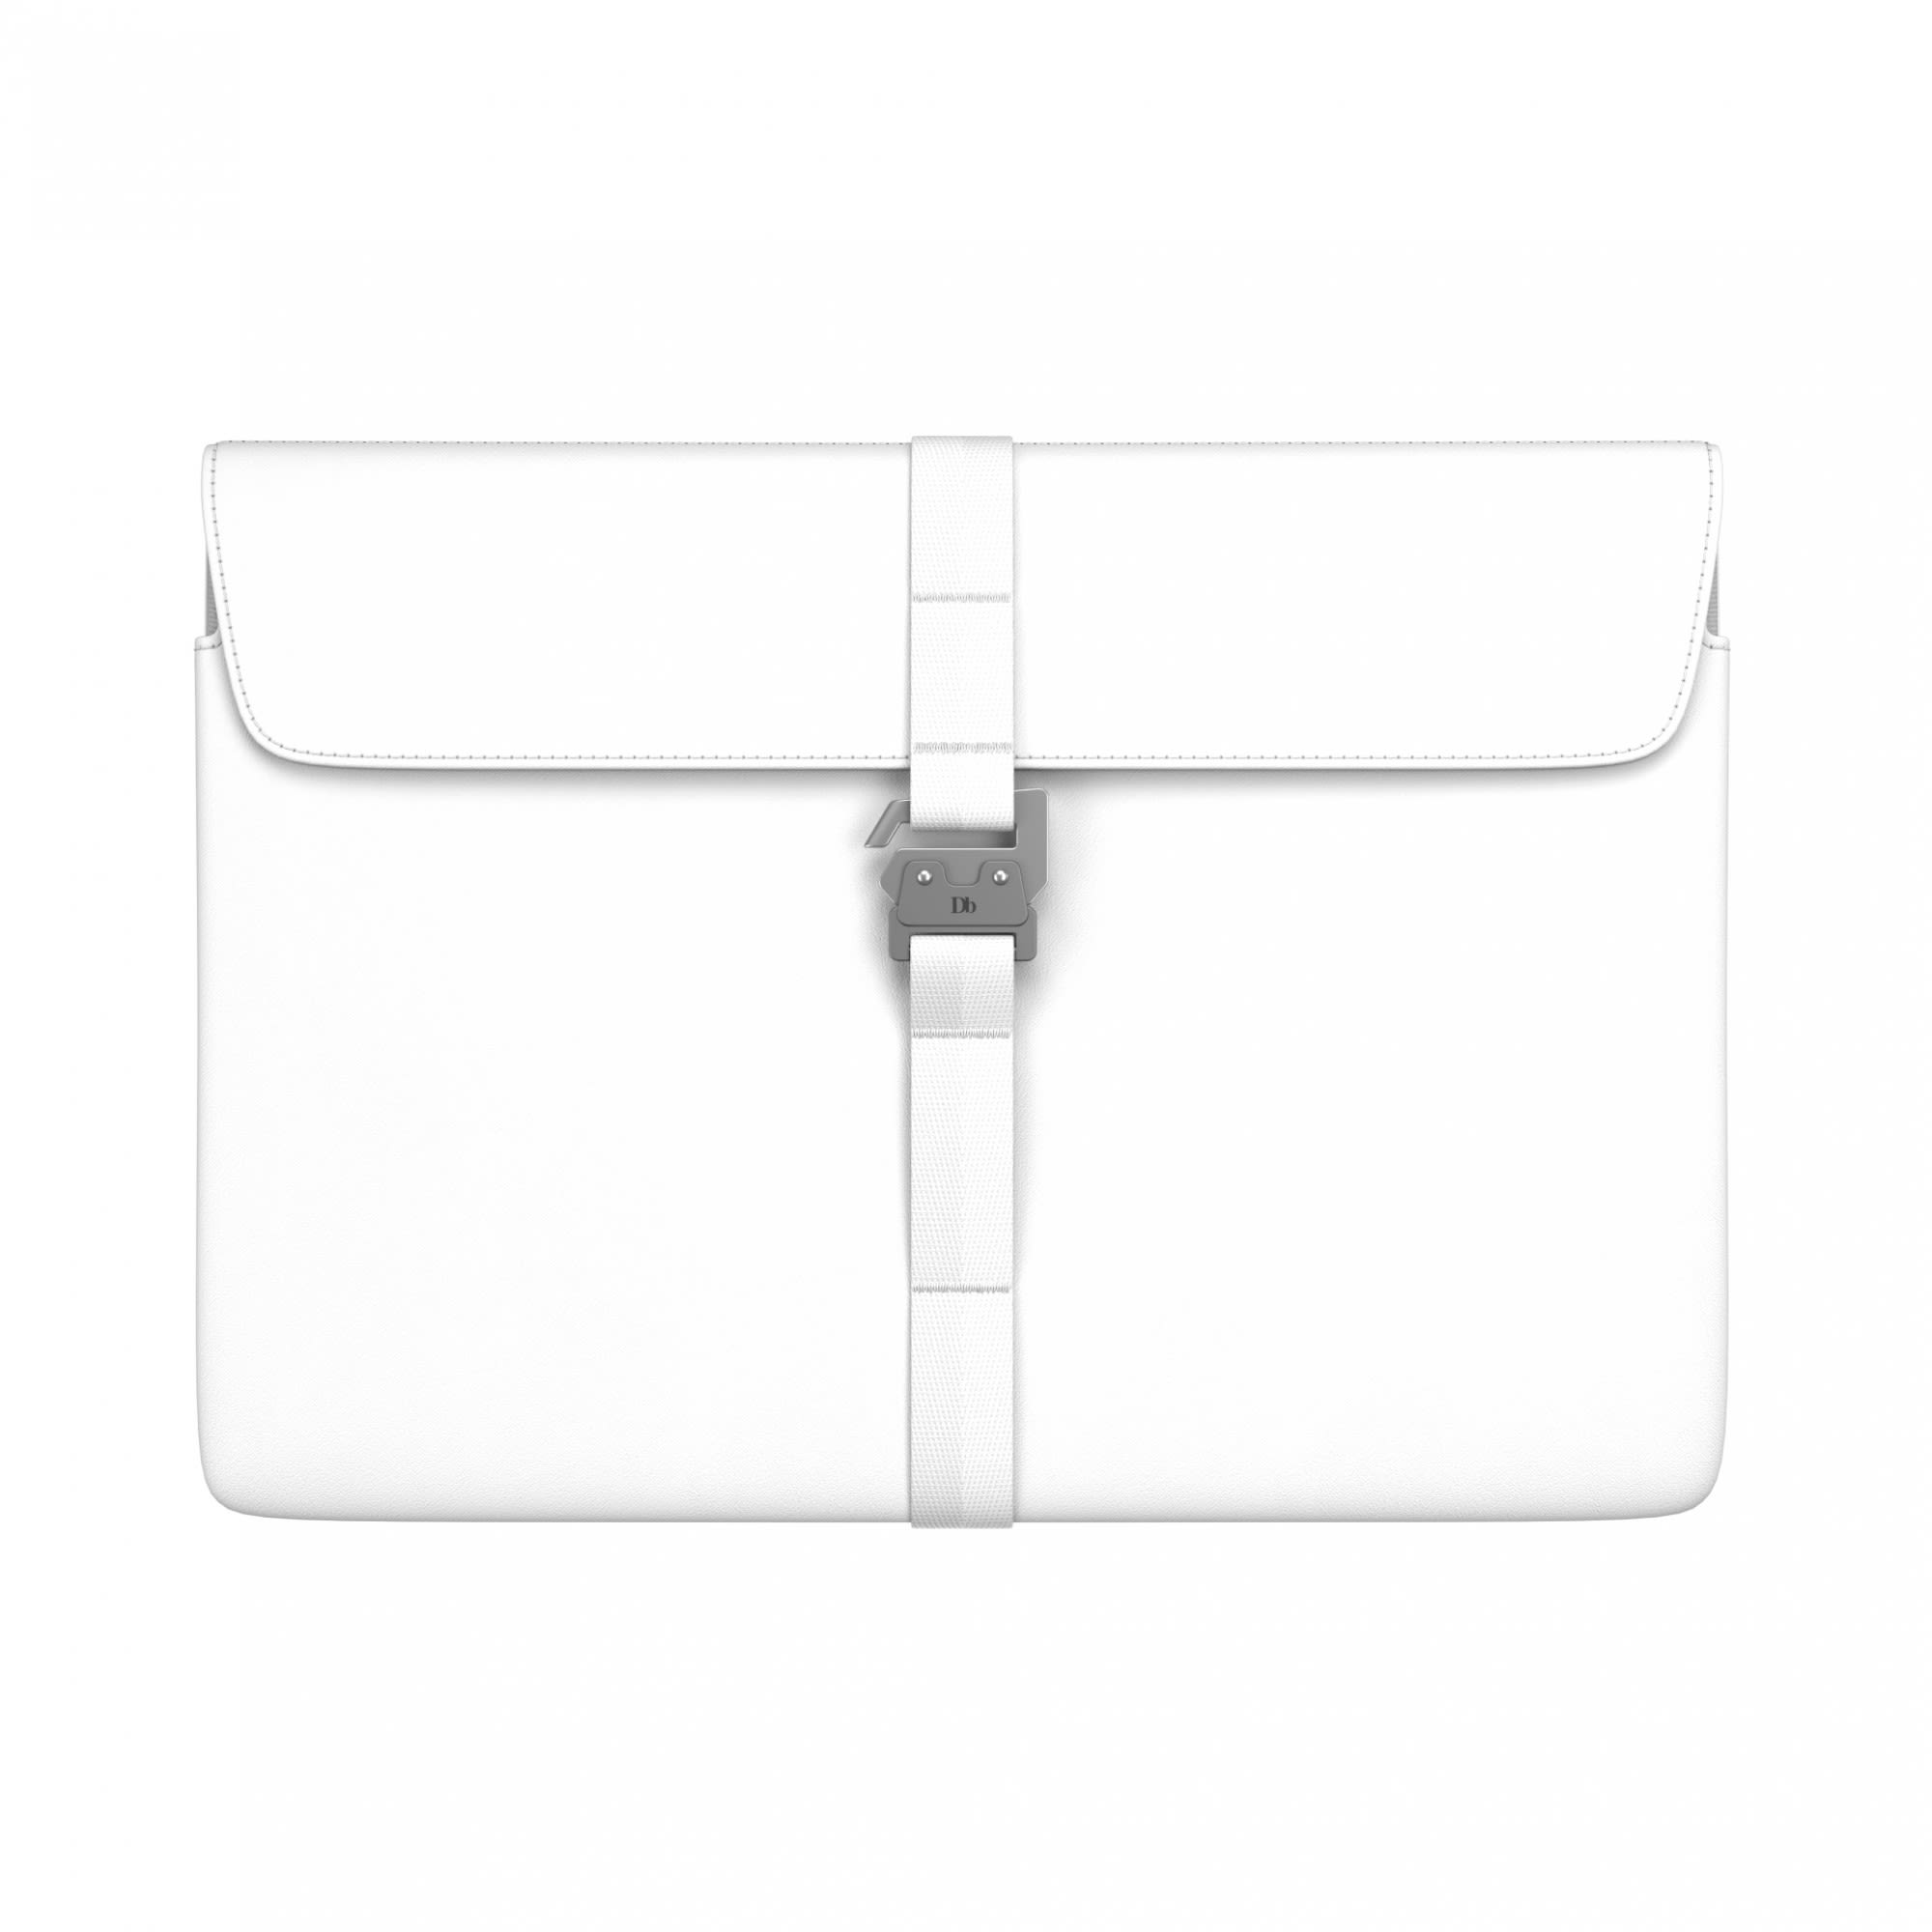 Db THE Vrldsvan Laptop Sleeve II 16- Weiss- Notebooktaschen- Grsse 16- - Farbe Whiteout